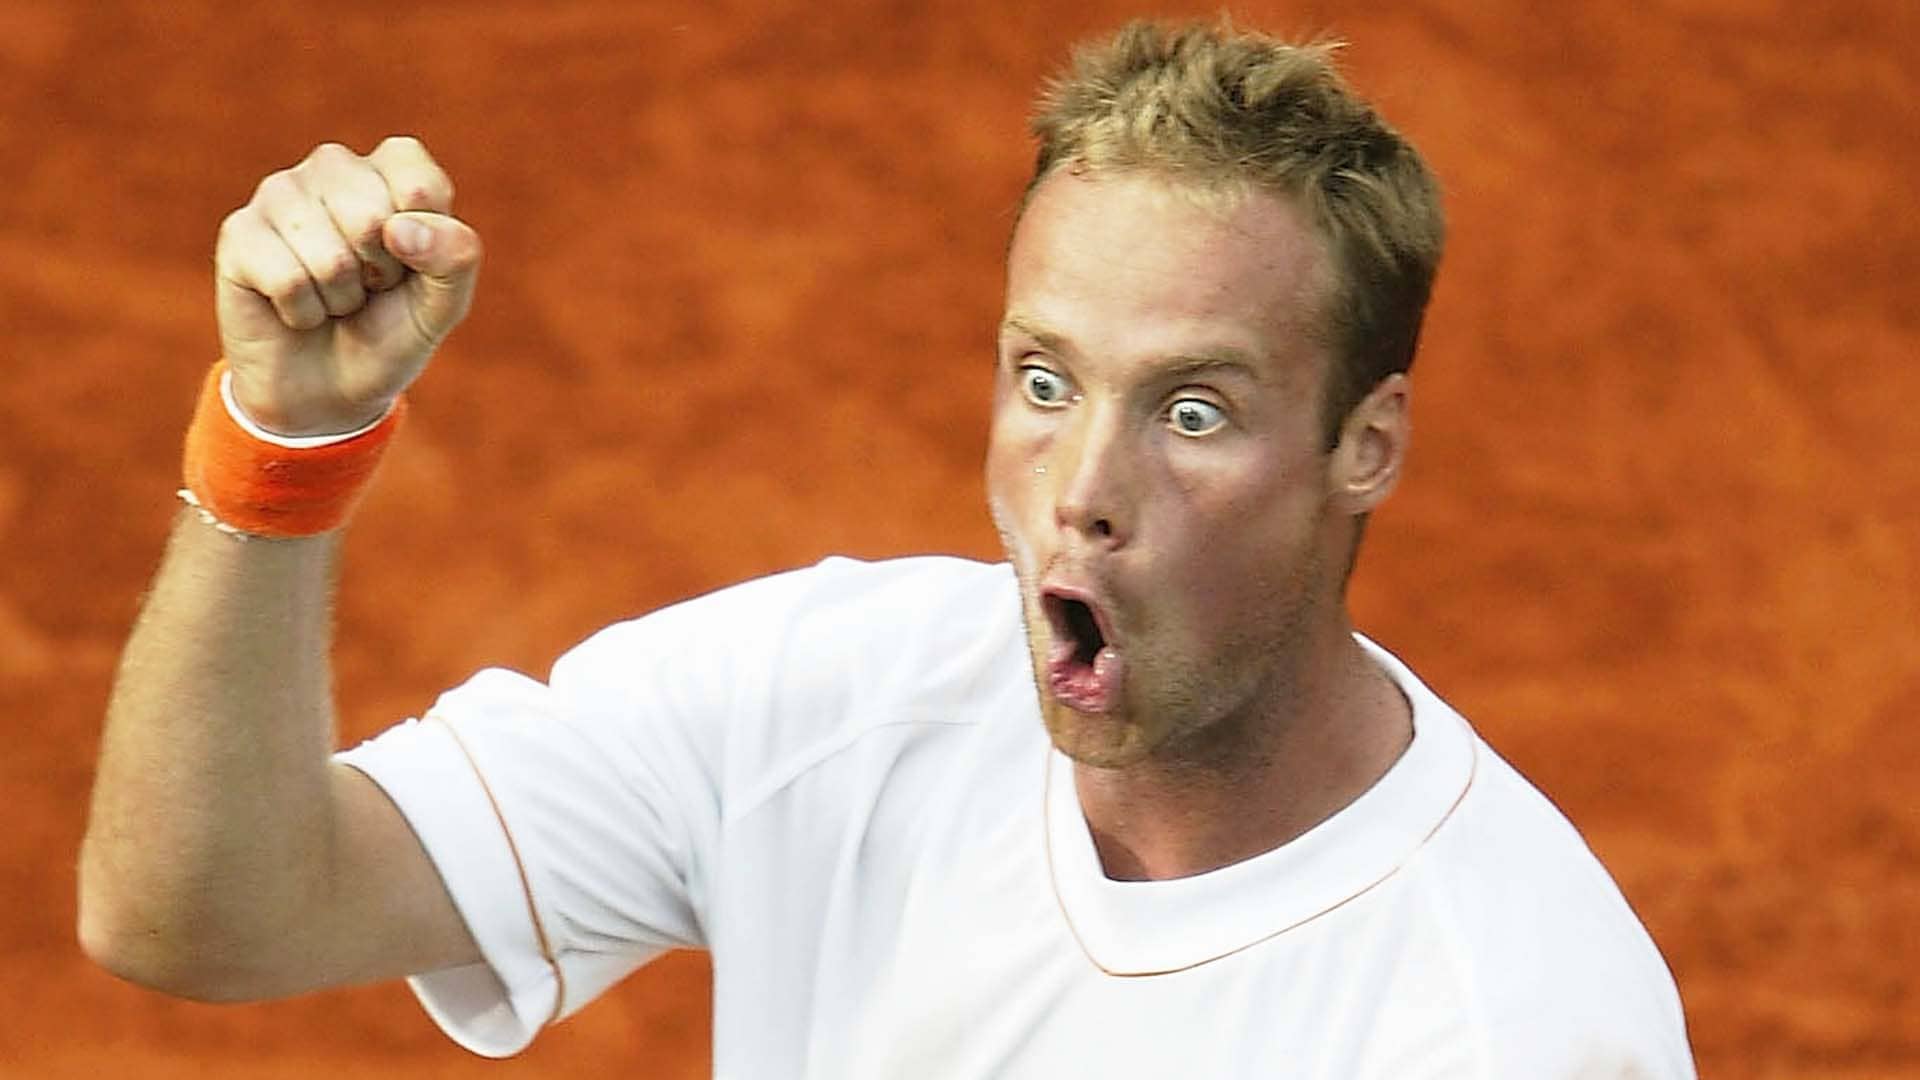 Martin Verkerk beat Carlos Moya in five sets to reach his first Grand Slam semi-final at Roland Garros in 2003.